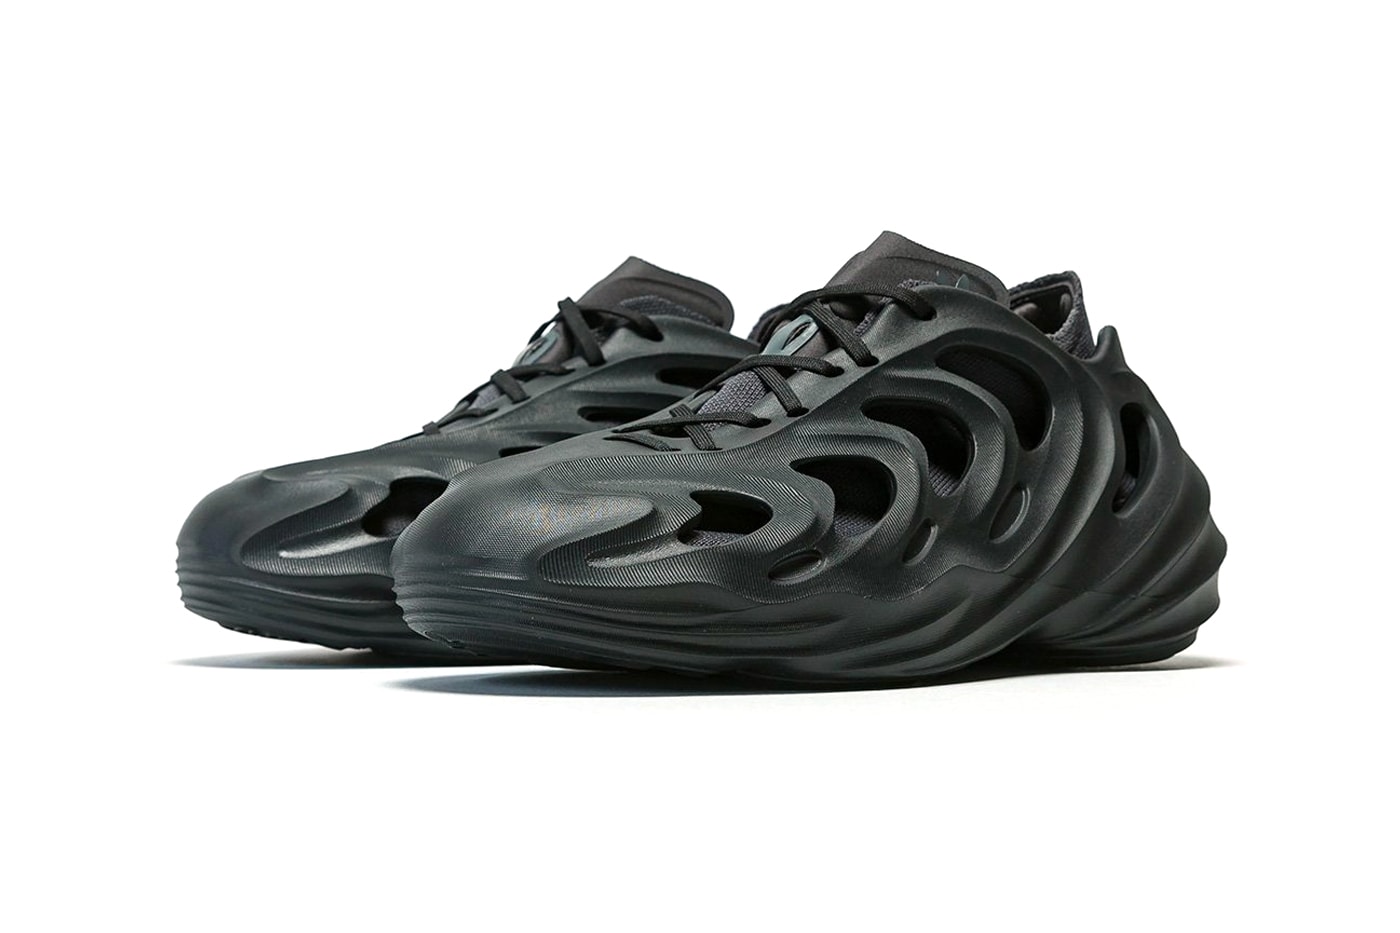 adidas adiFOM Q Black Carbon Wonder White Release Info hp6586 hp6582 Date Buy Price 